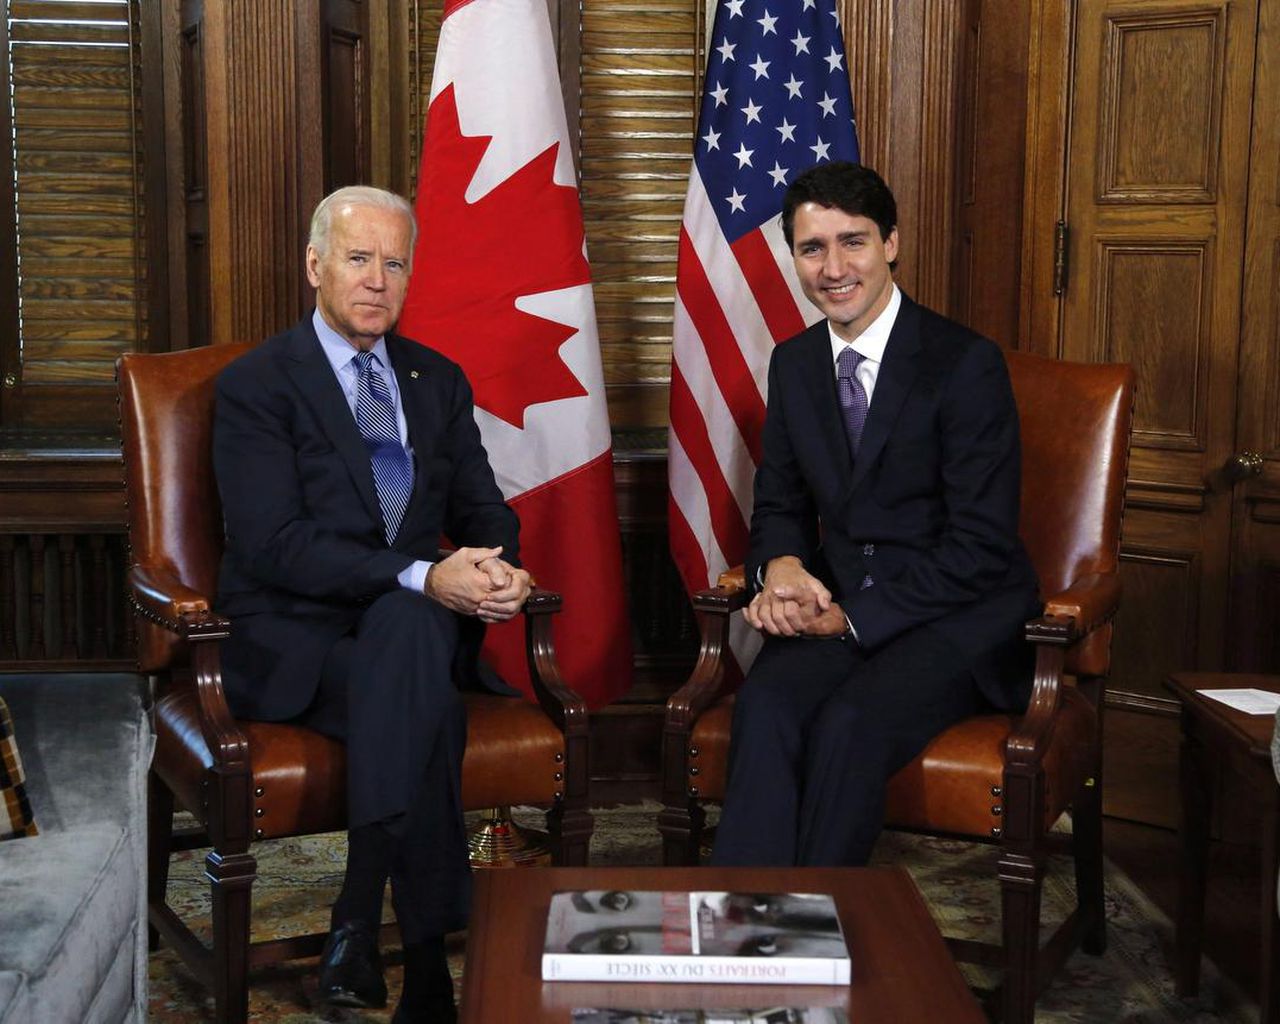 US President Joe Biden and Canadian Prime Minister Justin Trudeau